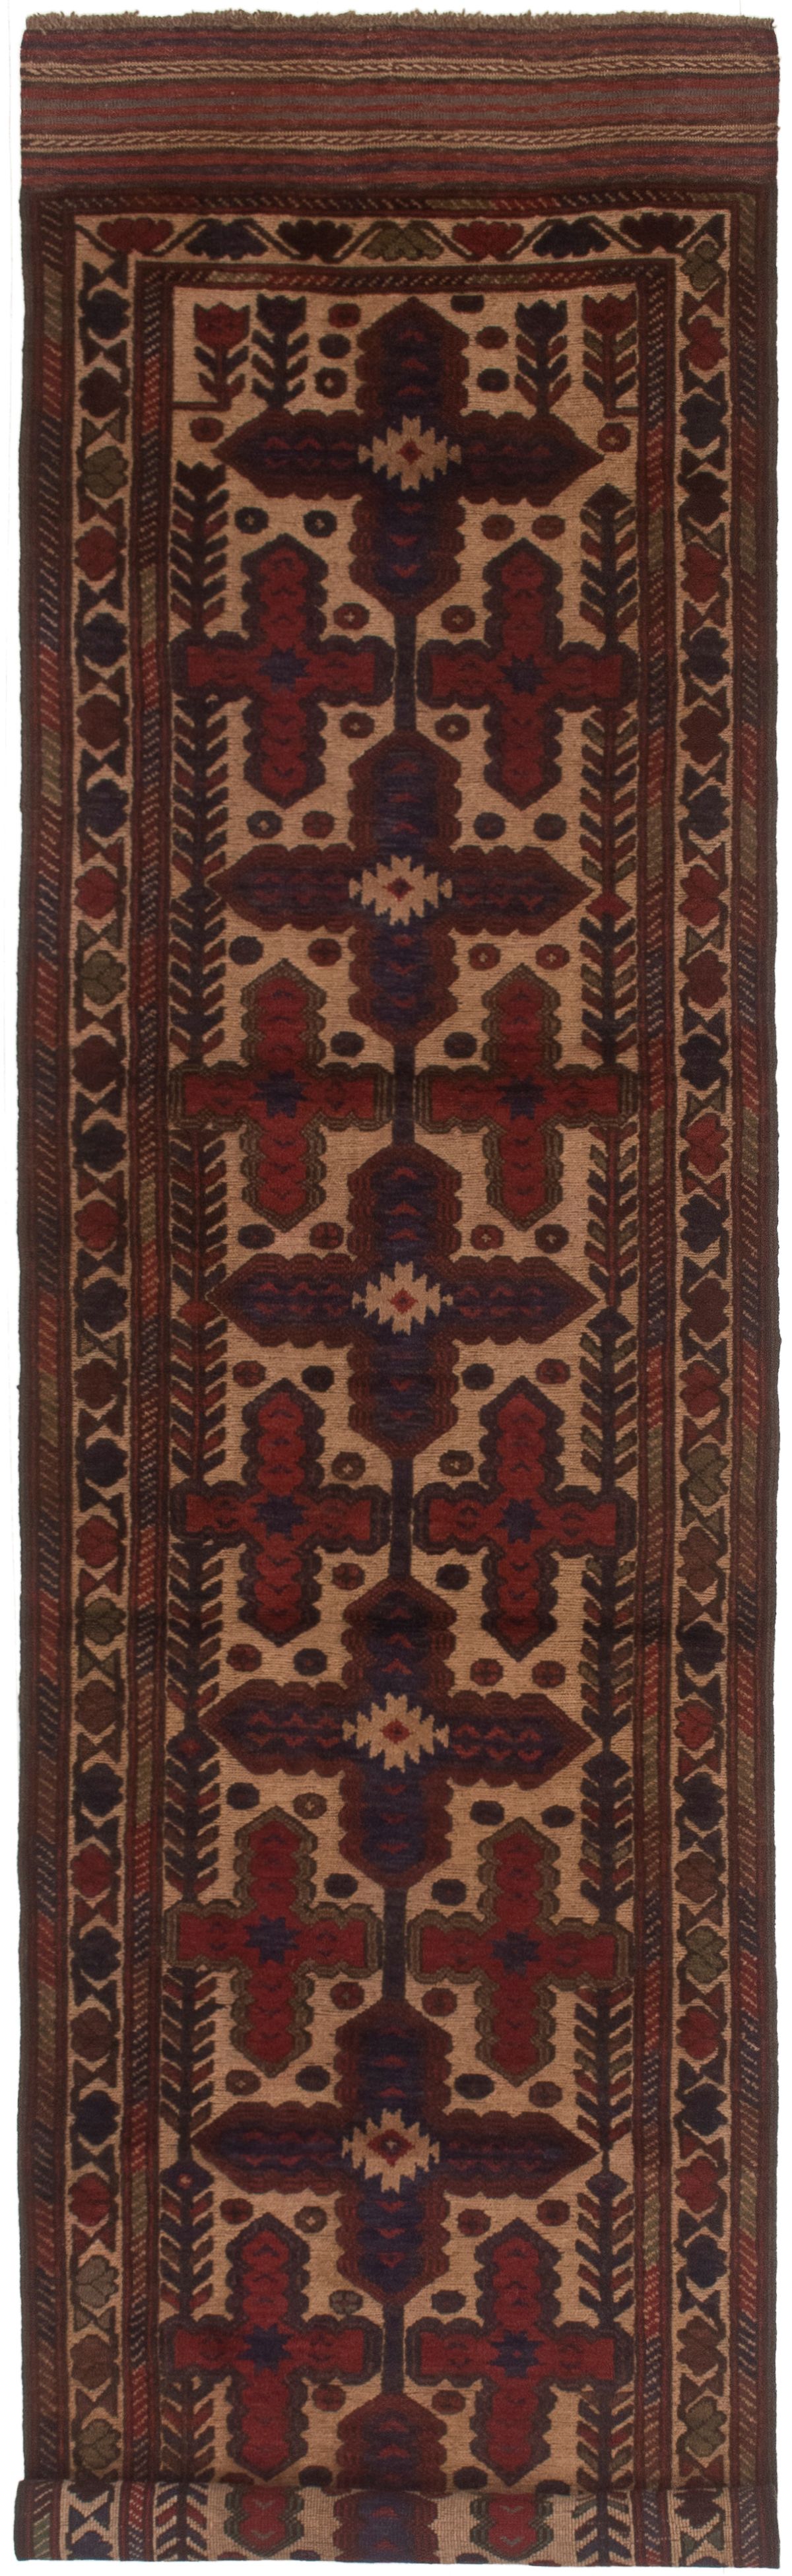 Hand-knotted Tajik Caucasian Cream, Red Wool Rug 2'9" x 11'9" Size: 2'9" x 11'9"  